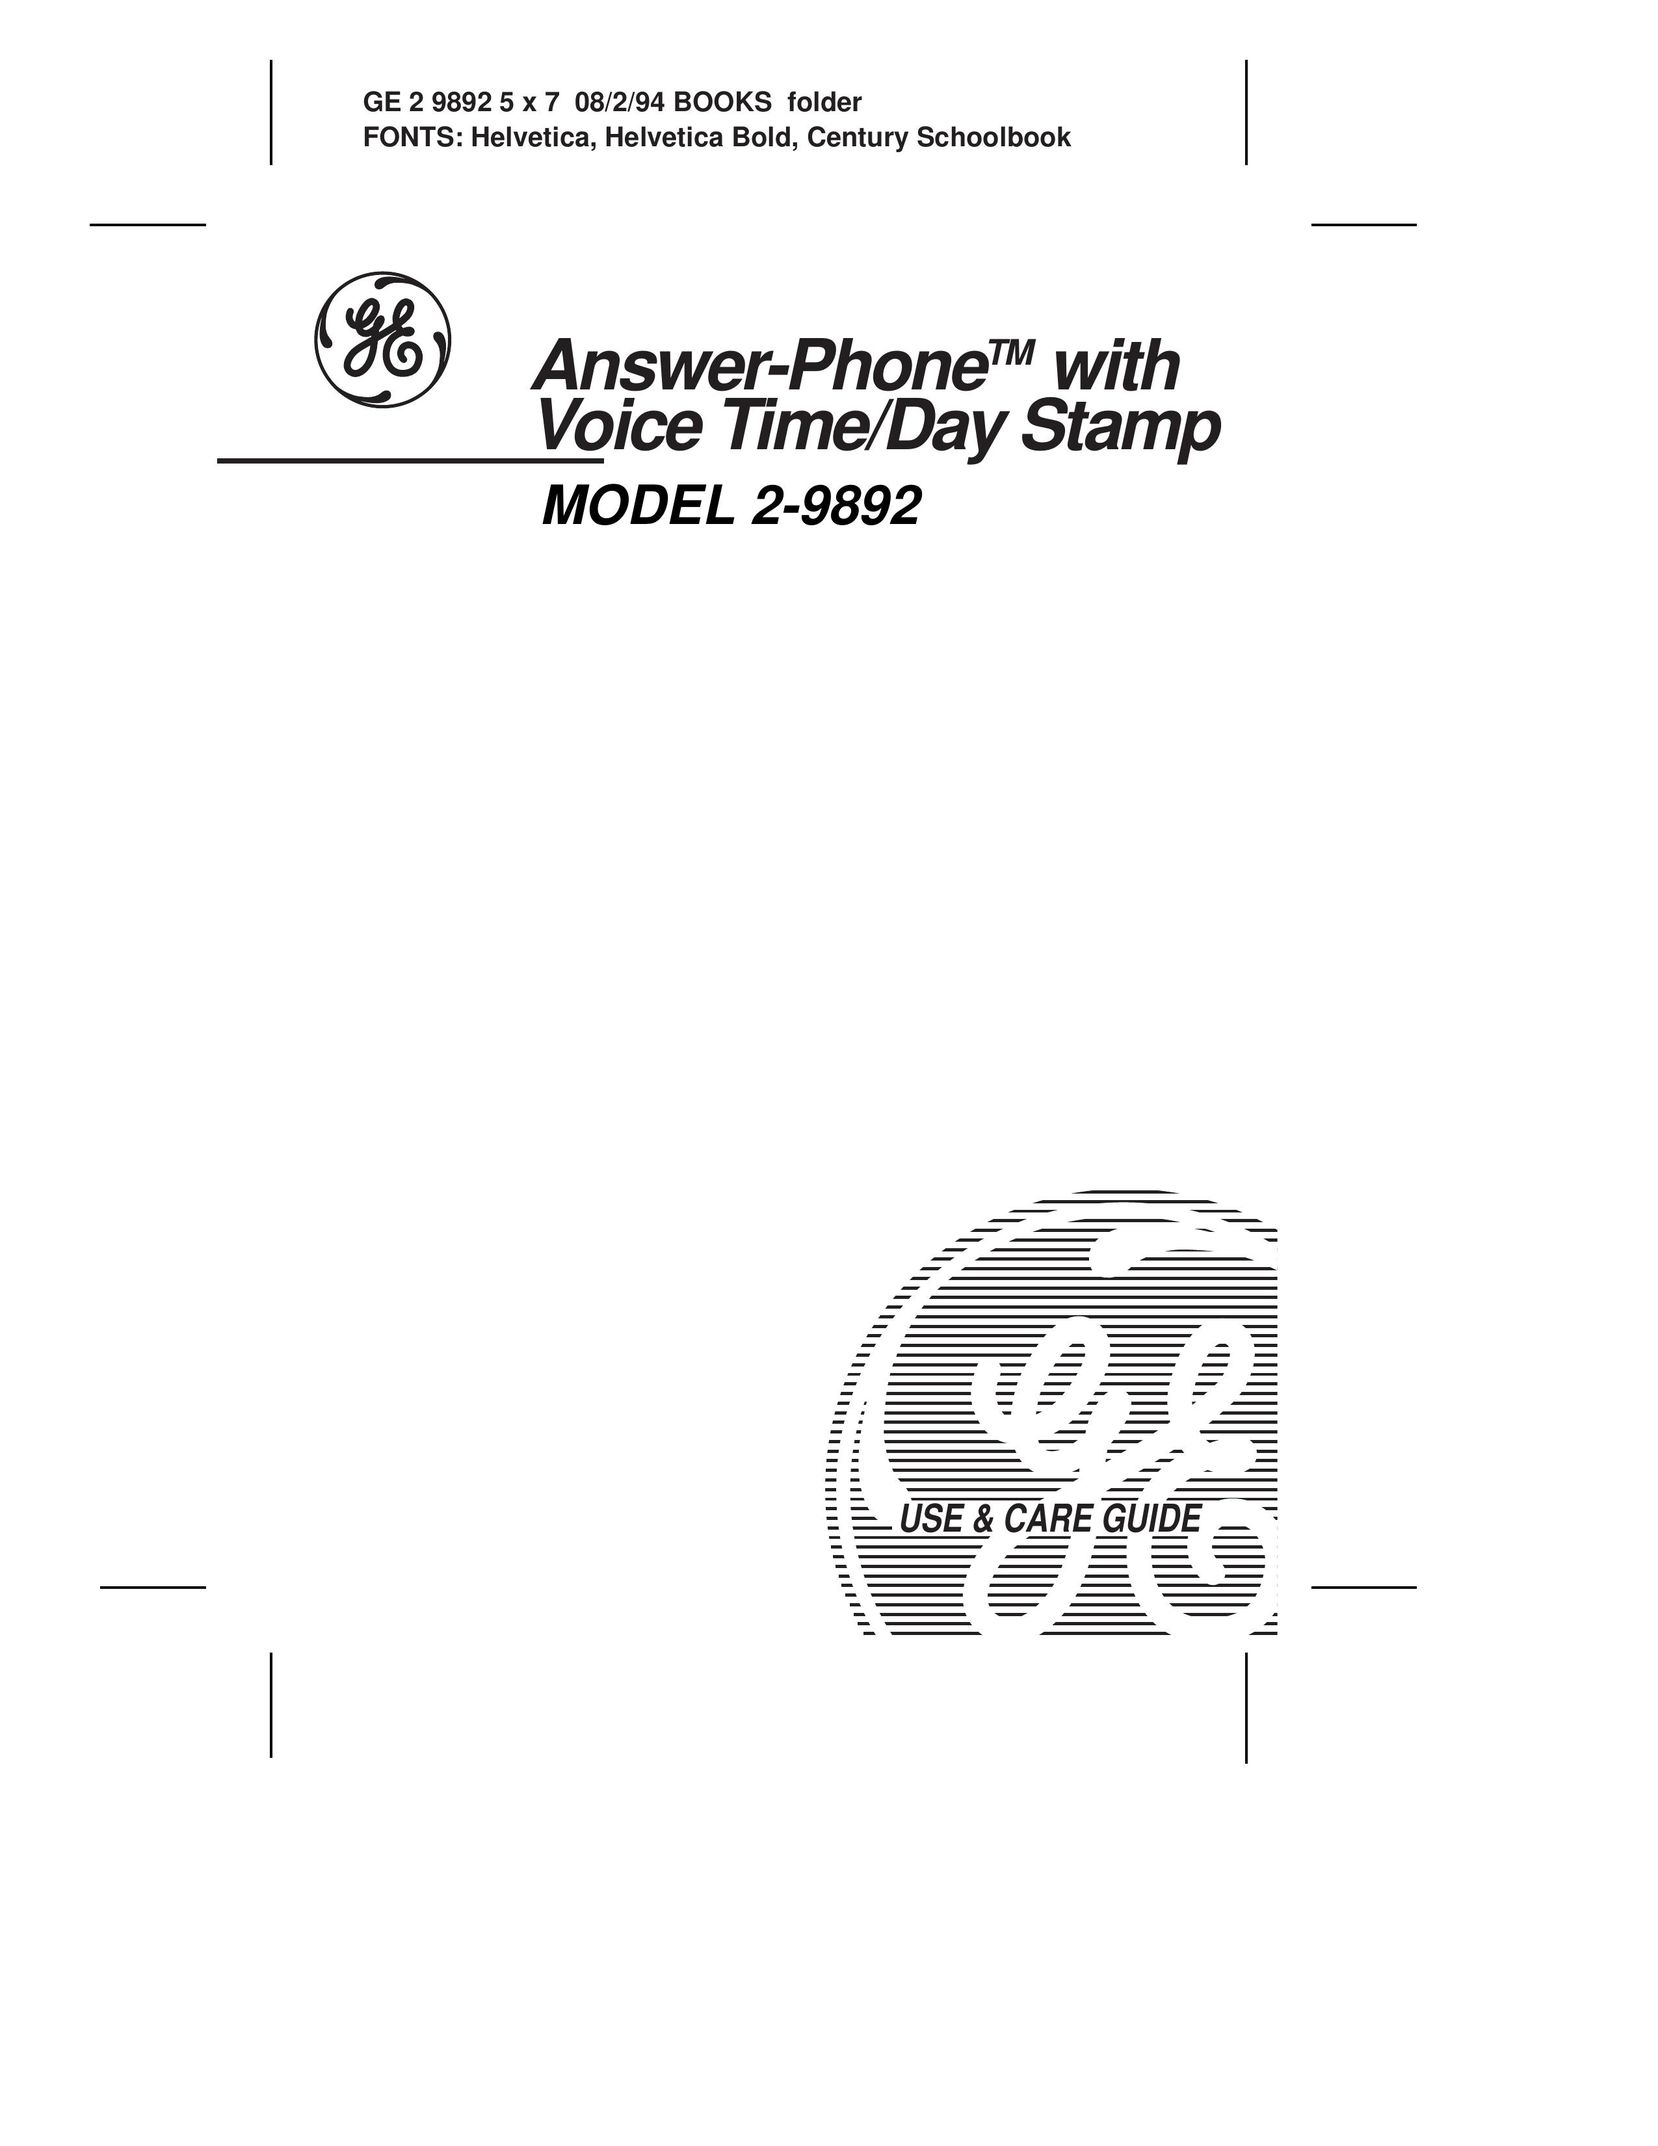 GE 2-9892 Answering Machine User Manual